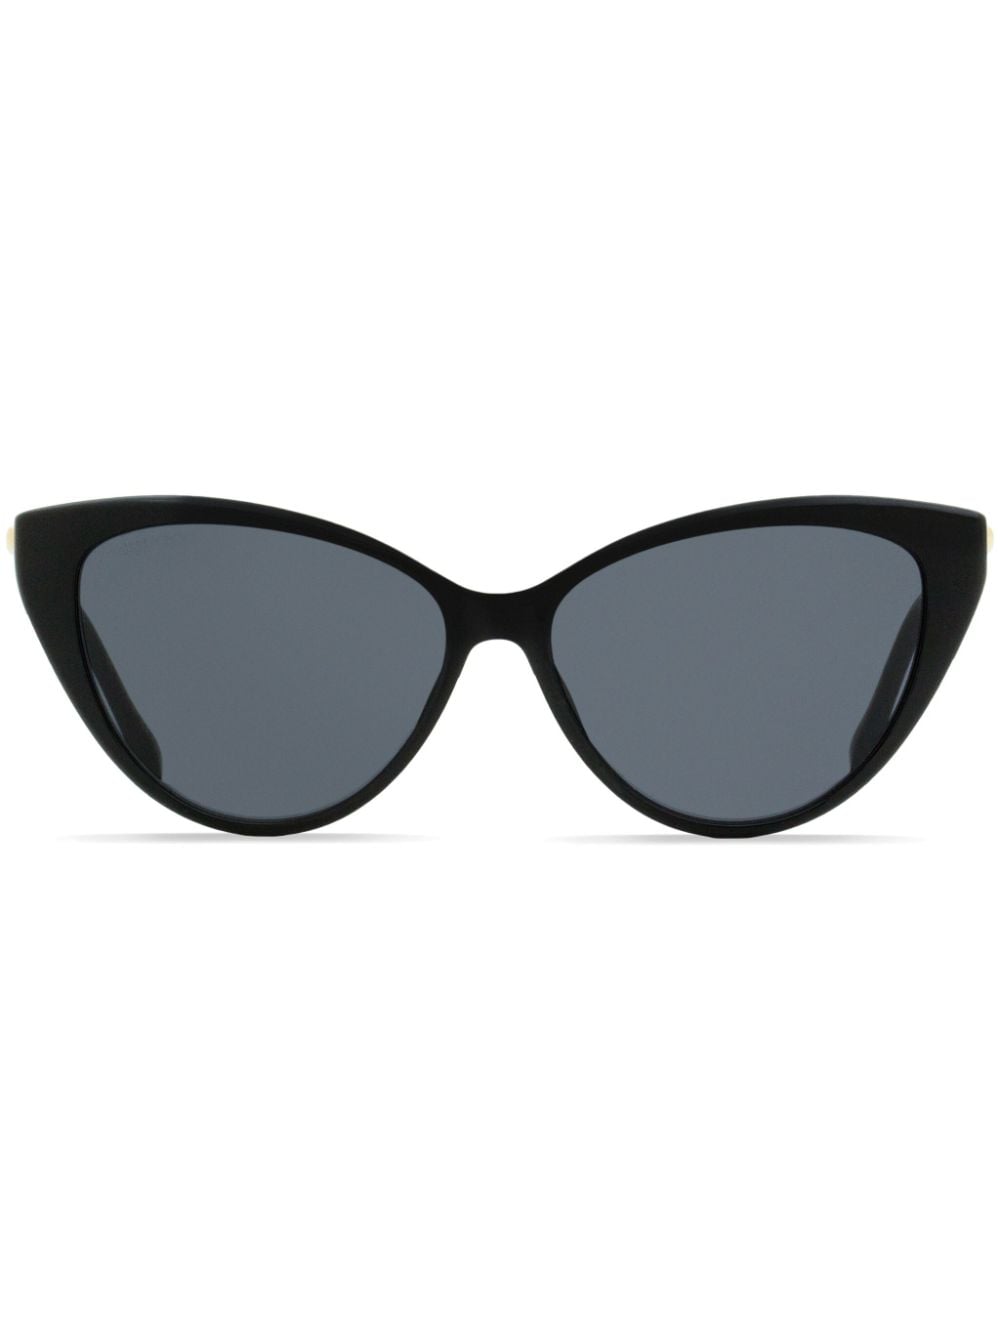 Jimmy Choo Eyewear Sonnenbrille mit Cat-Eye-Gestell - Schwarz von Jimmy Choo Eyewear